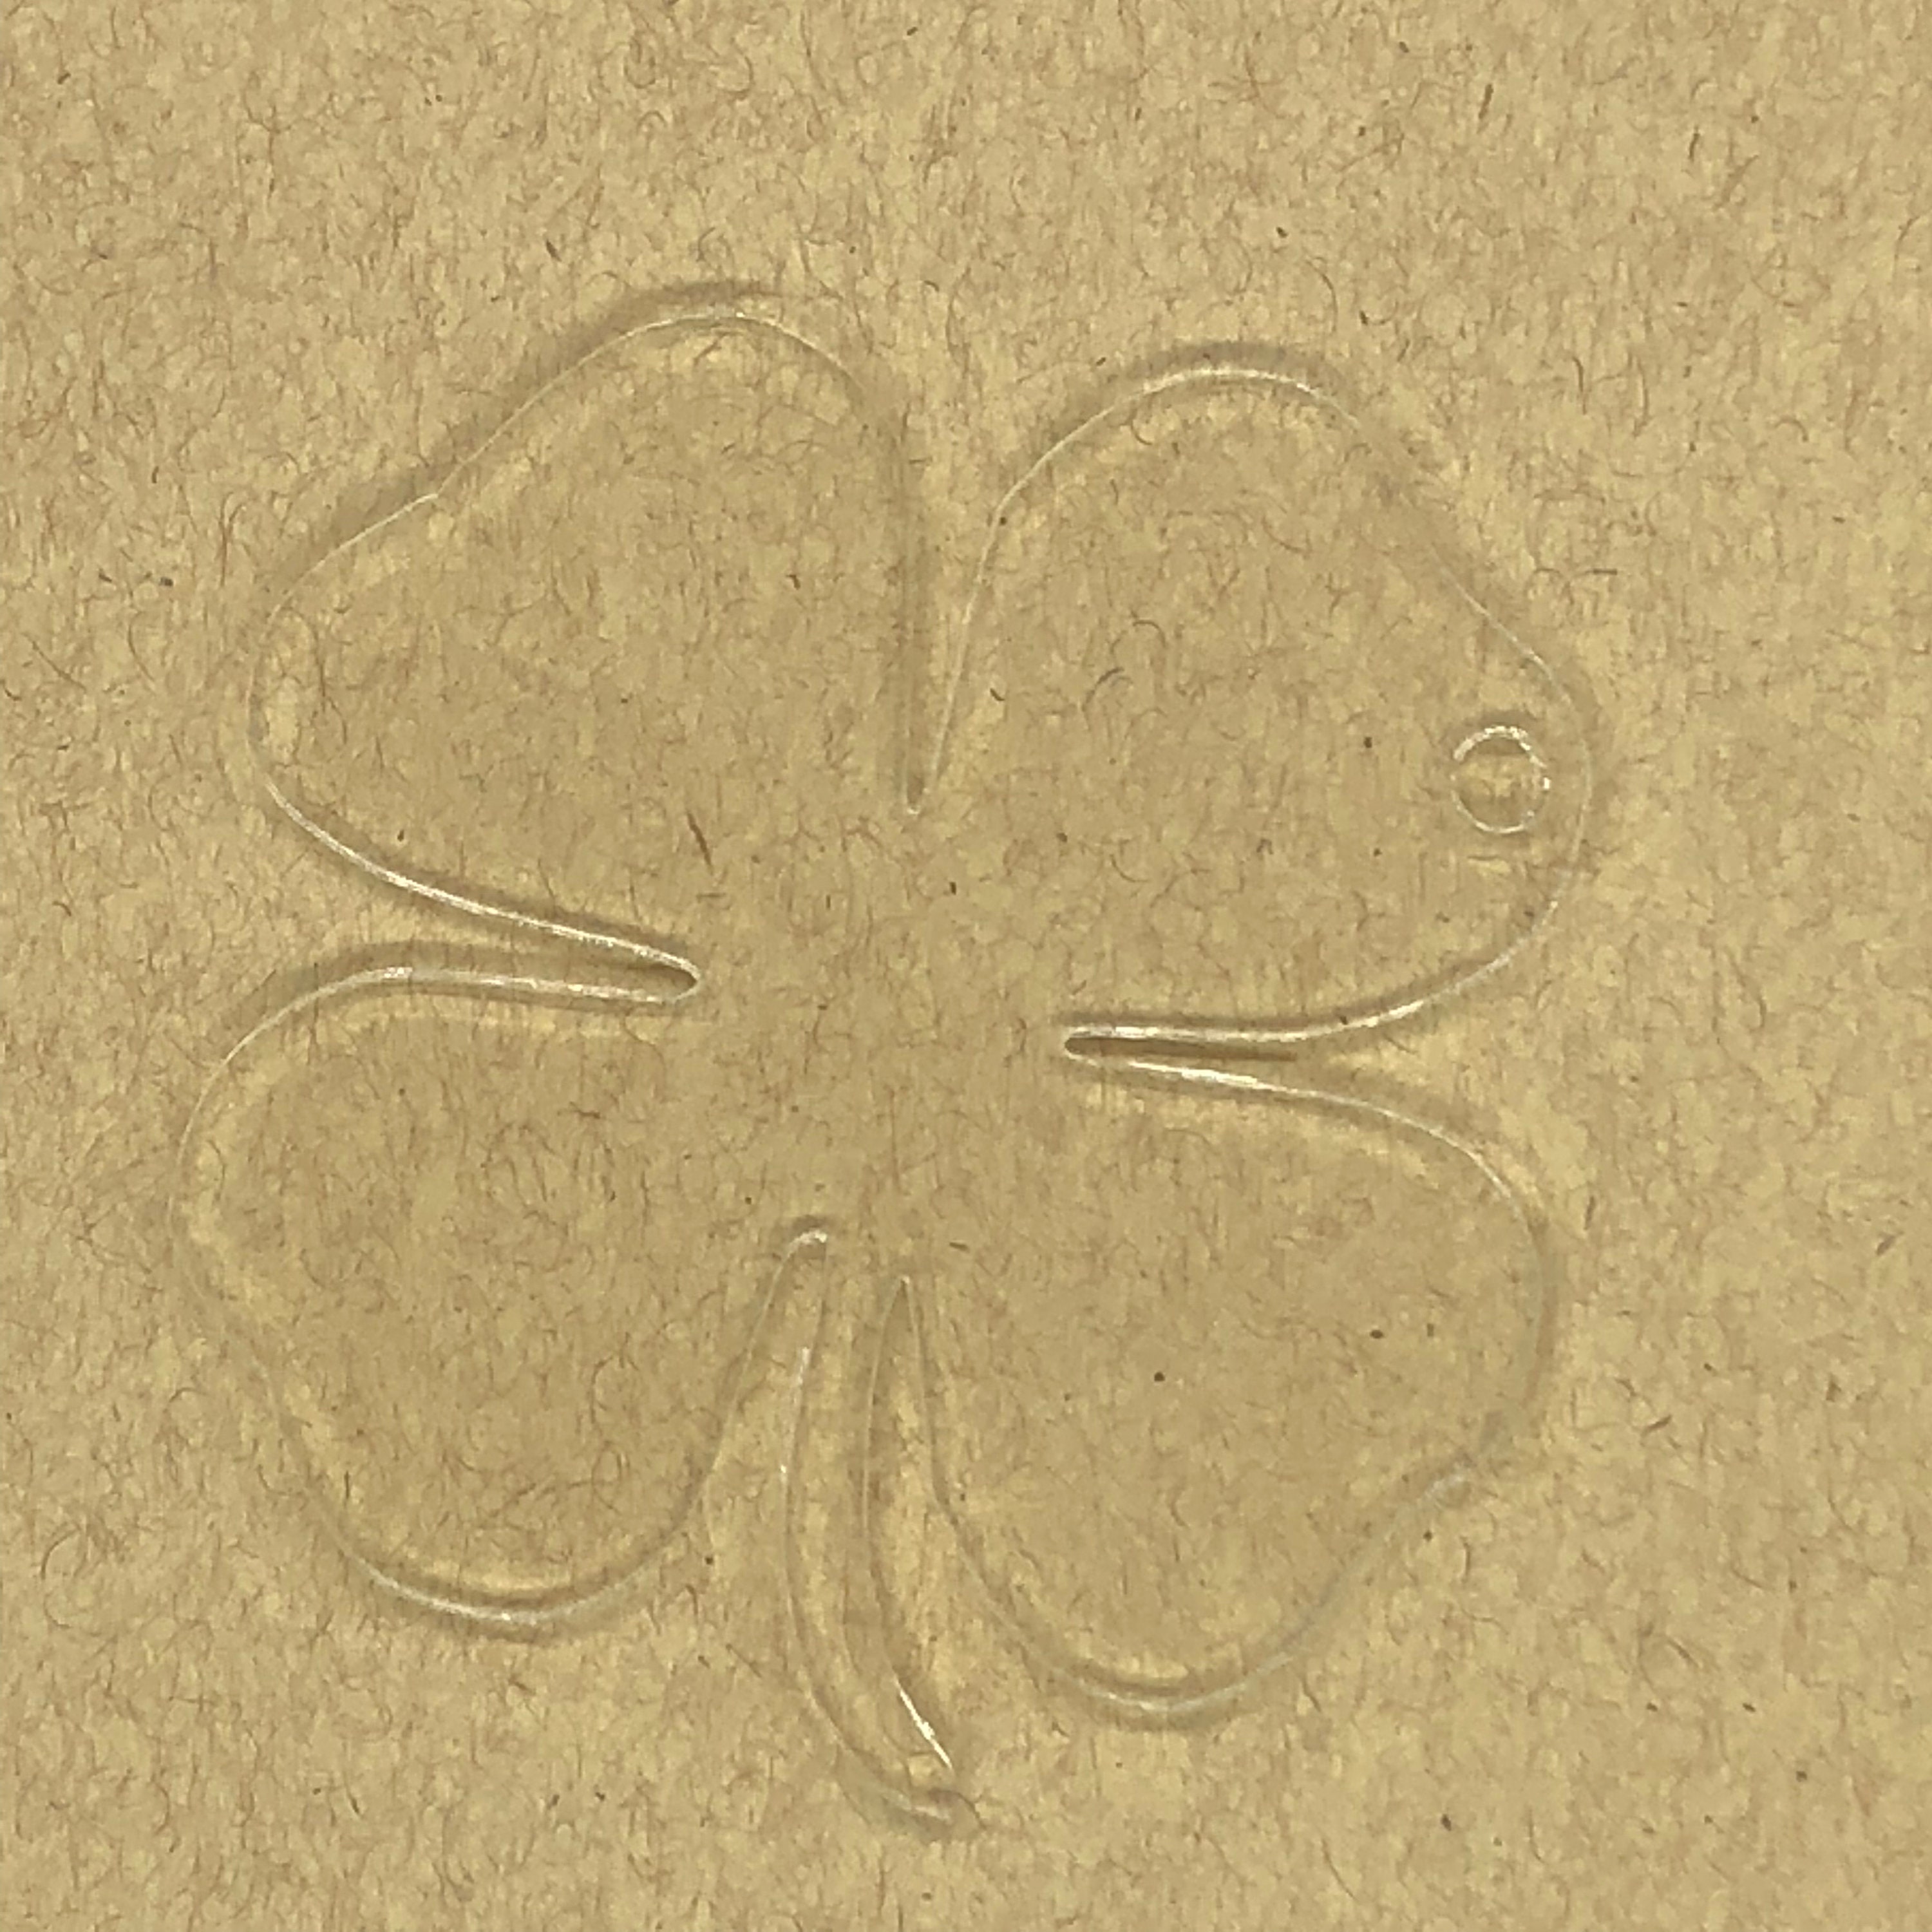 Badge Reel Set of 10 Four Leaf Clover Acrylic Blank Shamrock Magnet DIY Craft Blank Keychain St Patrick’s Day Pinch Me